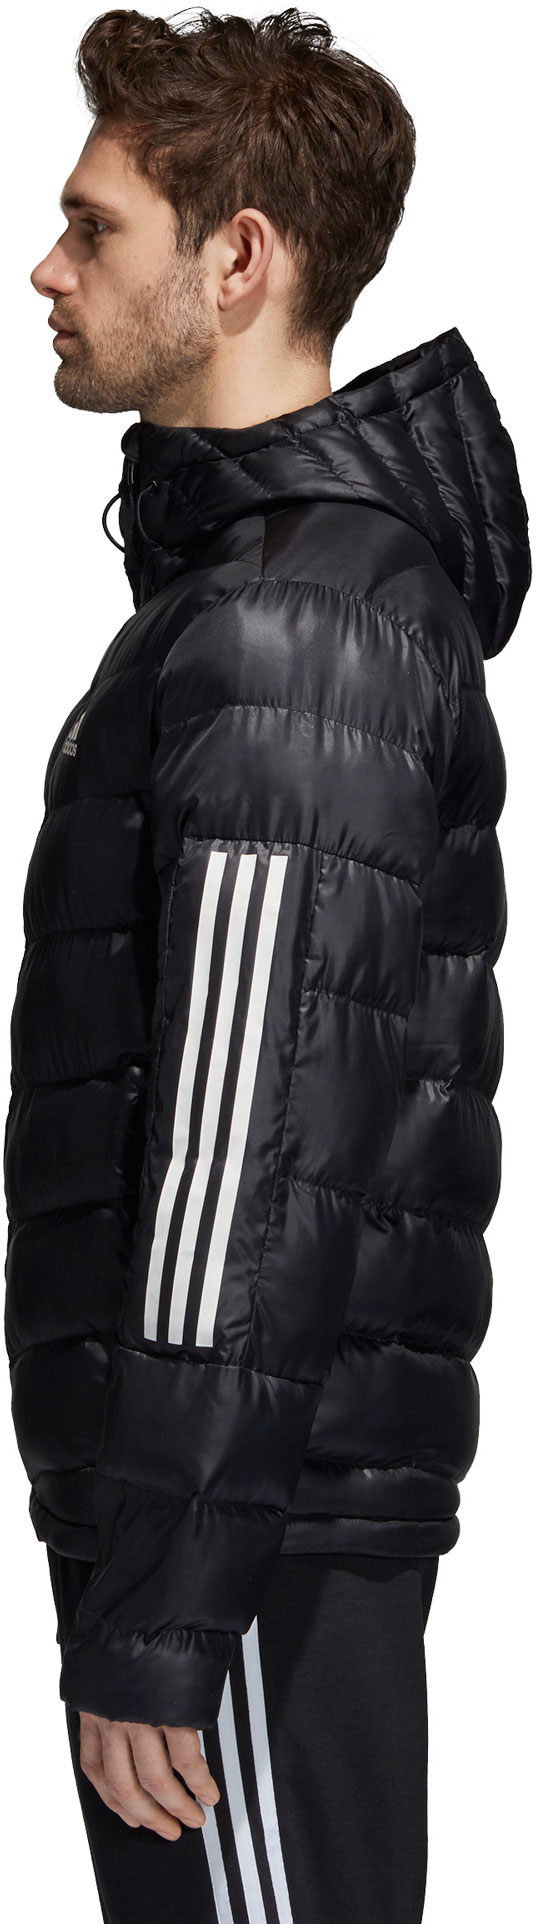 adidas itavic jacket